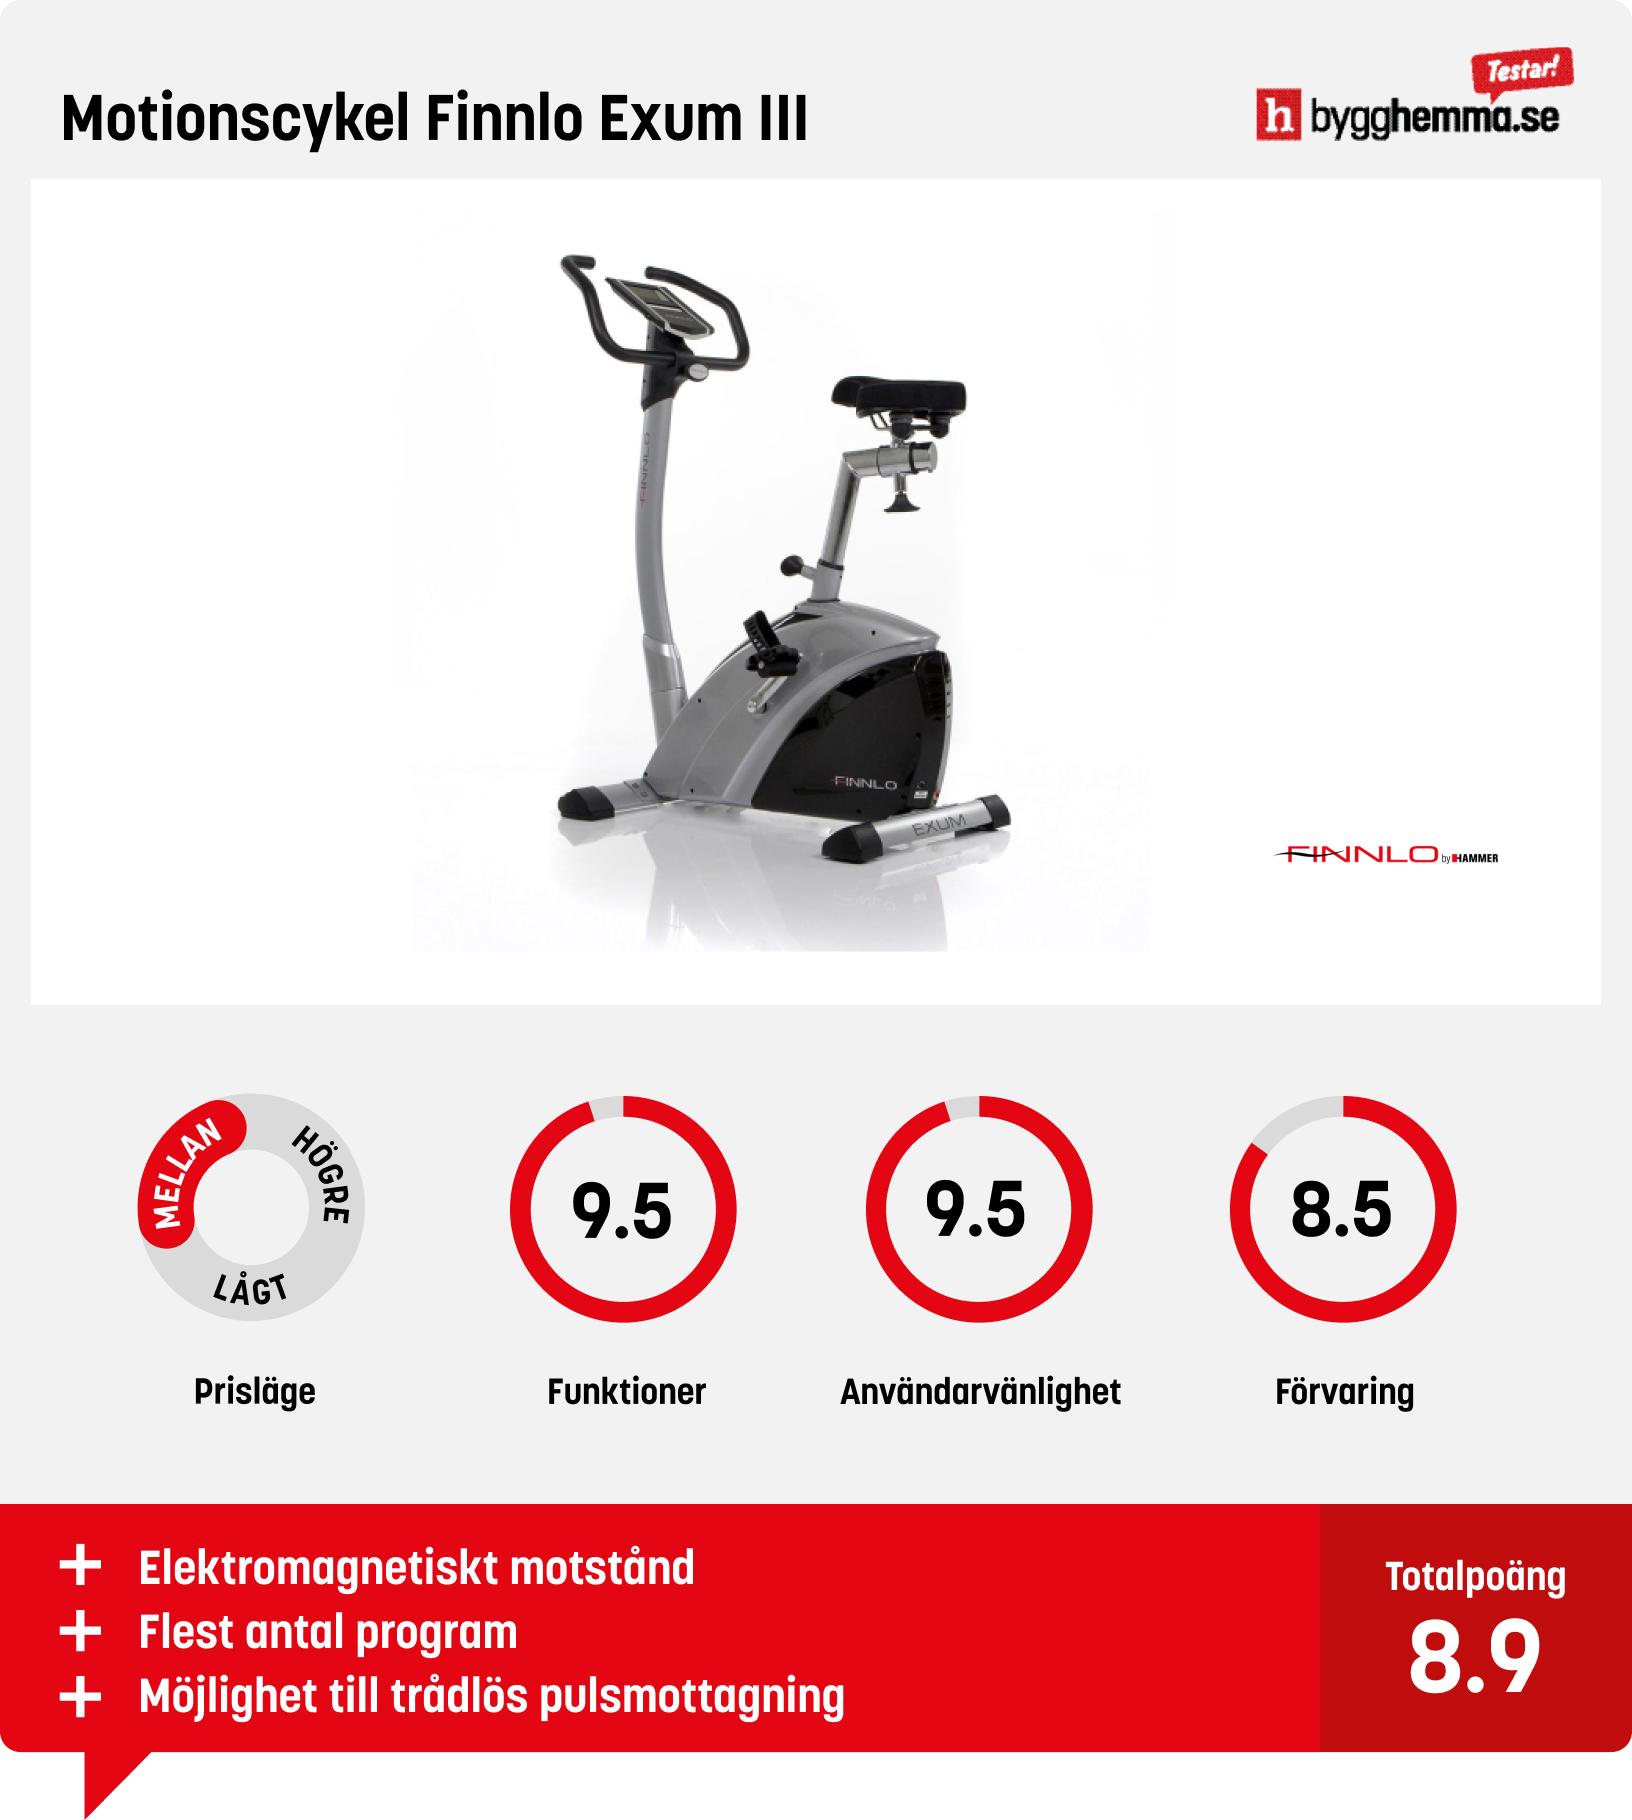 Motionscykel bäst i test - Motionscykel Finnlo Exum III